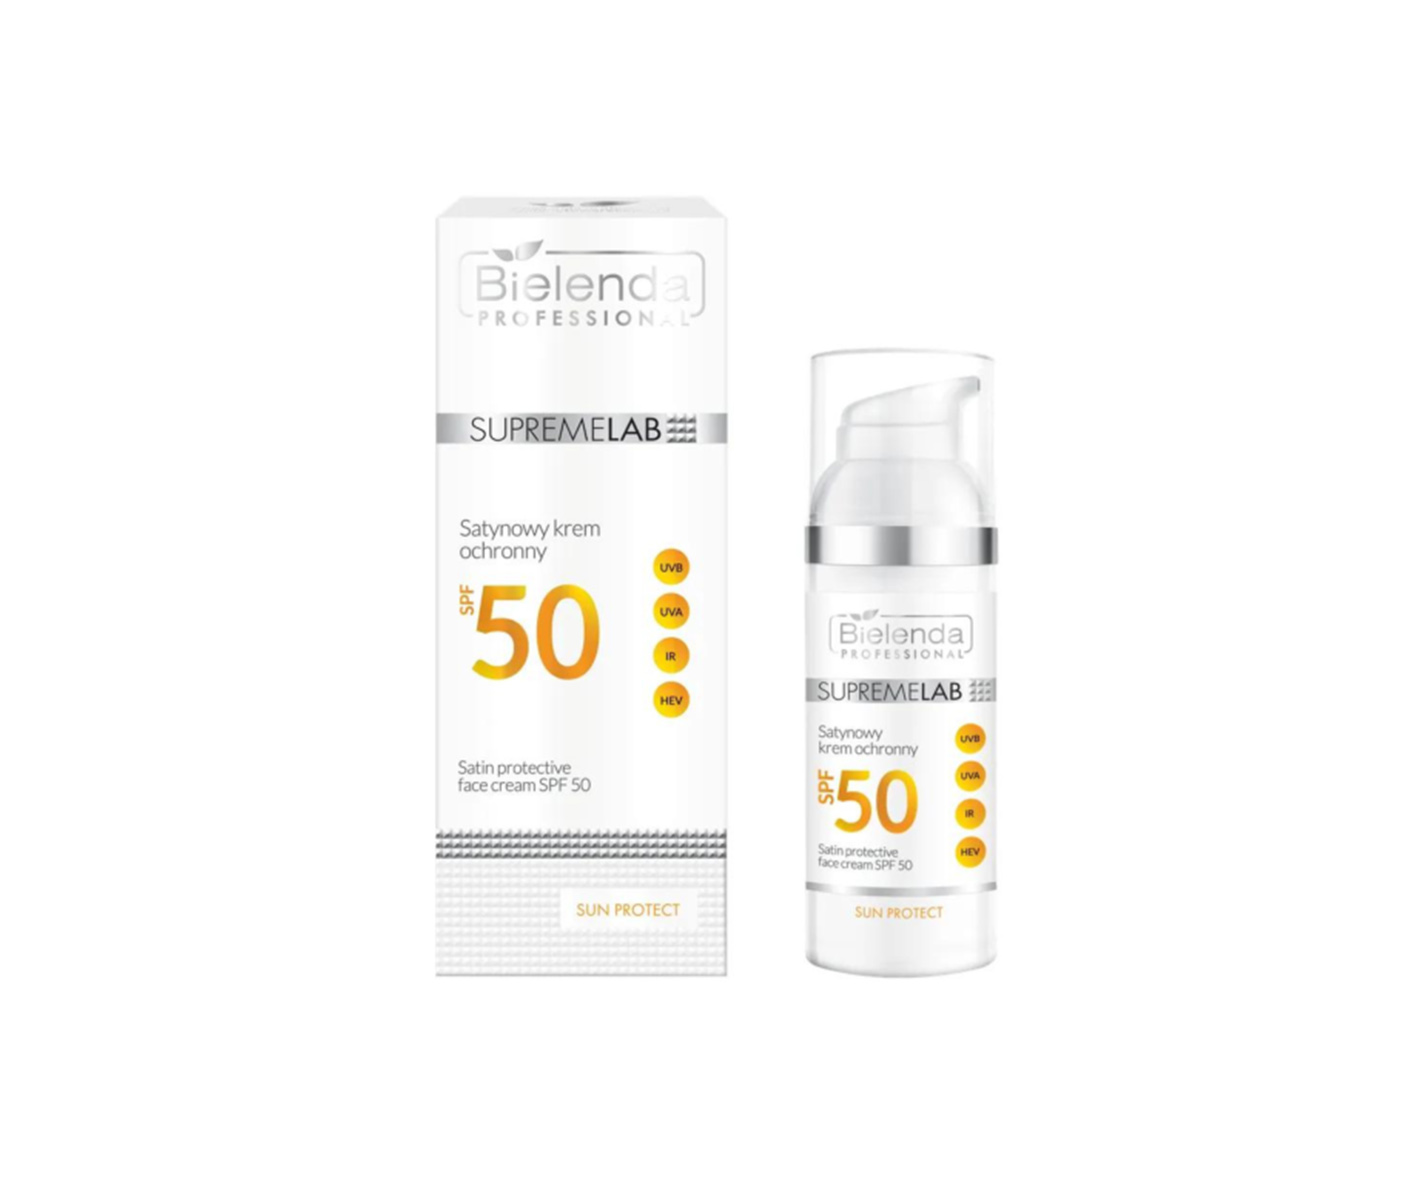 Bielenda Professional, SupremeLab, Satin Protective Face Cream SPF 50, SPF50 face cream